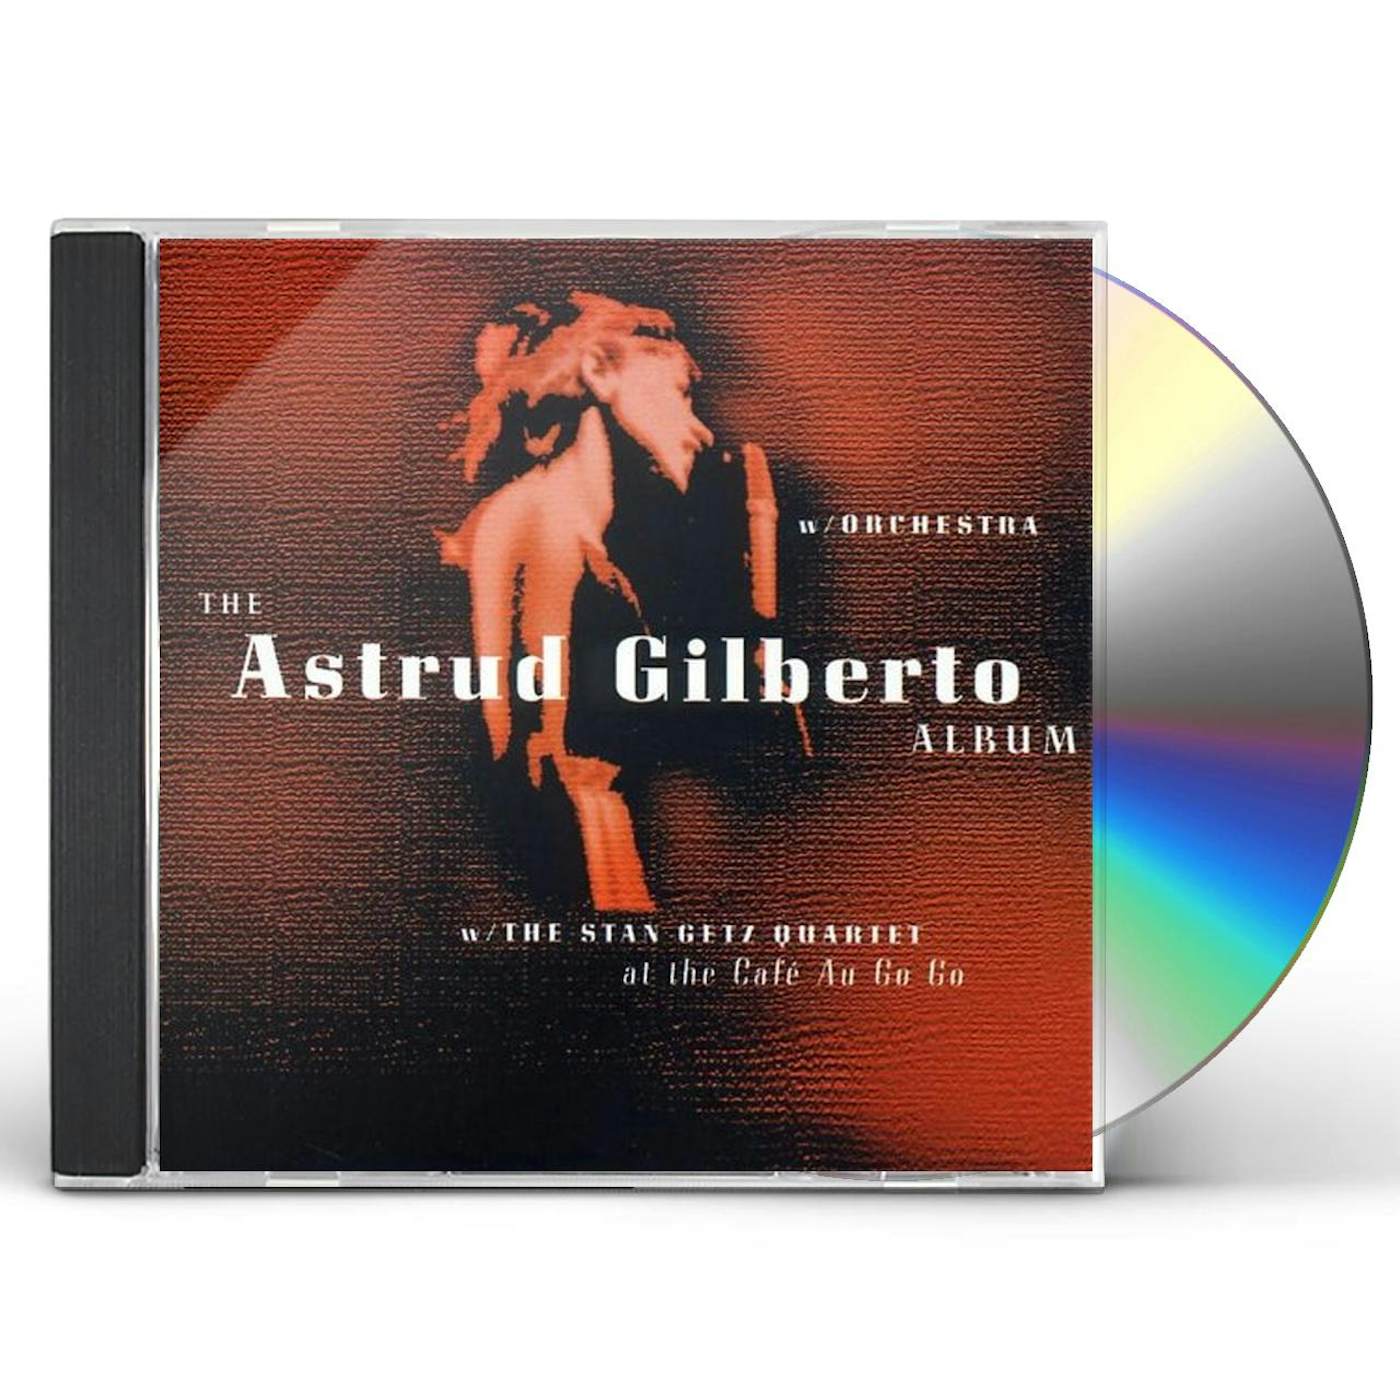 Astrud Gilberto AT THE CAFE AU GO GO CD